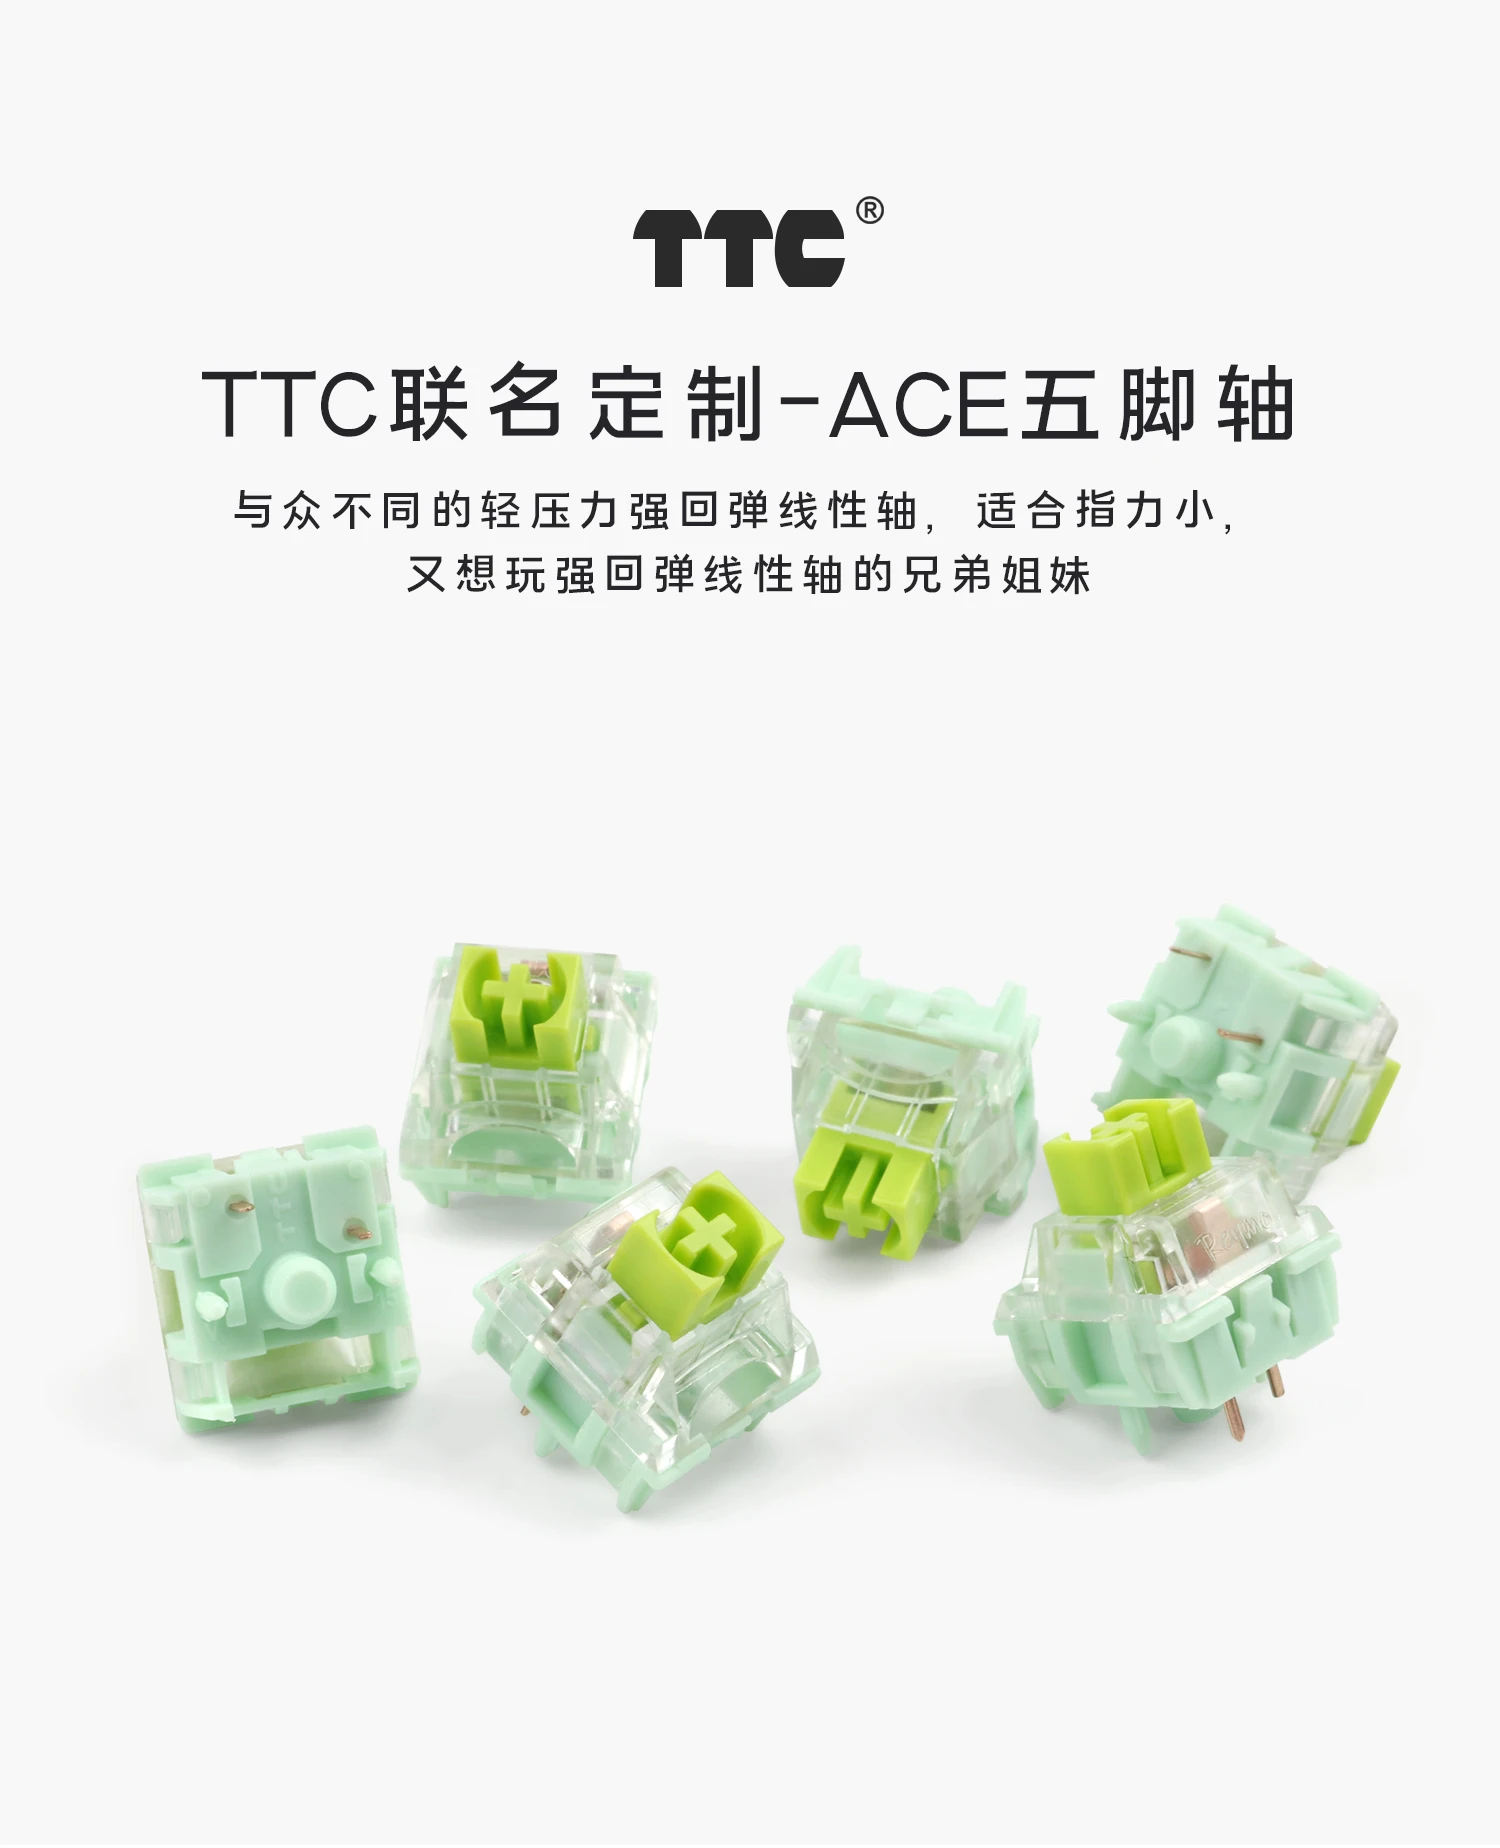 Ttc ace switch seadrive download